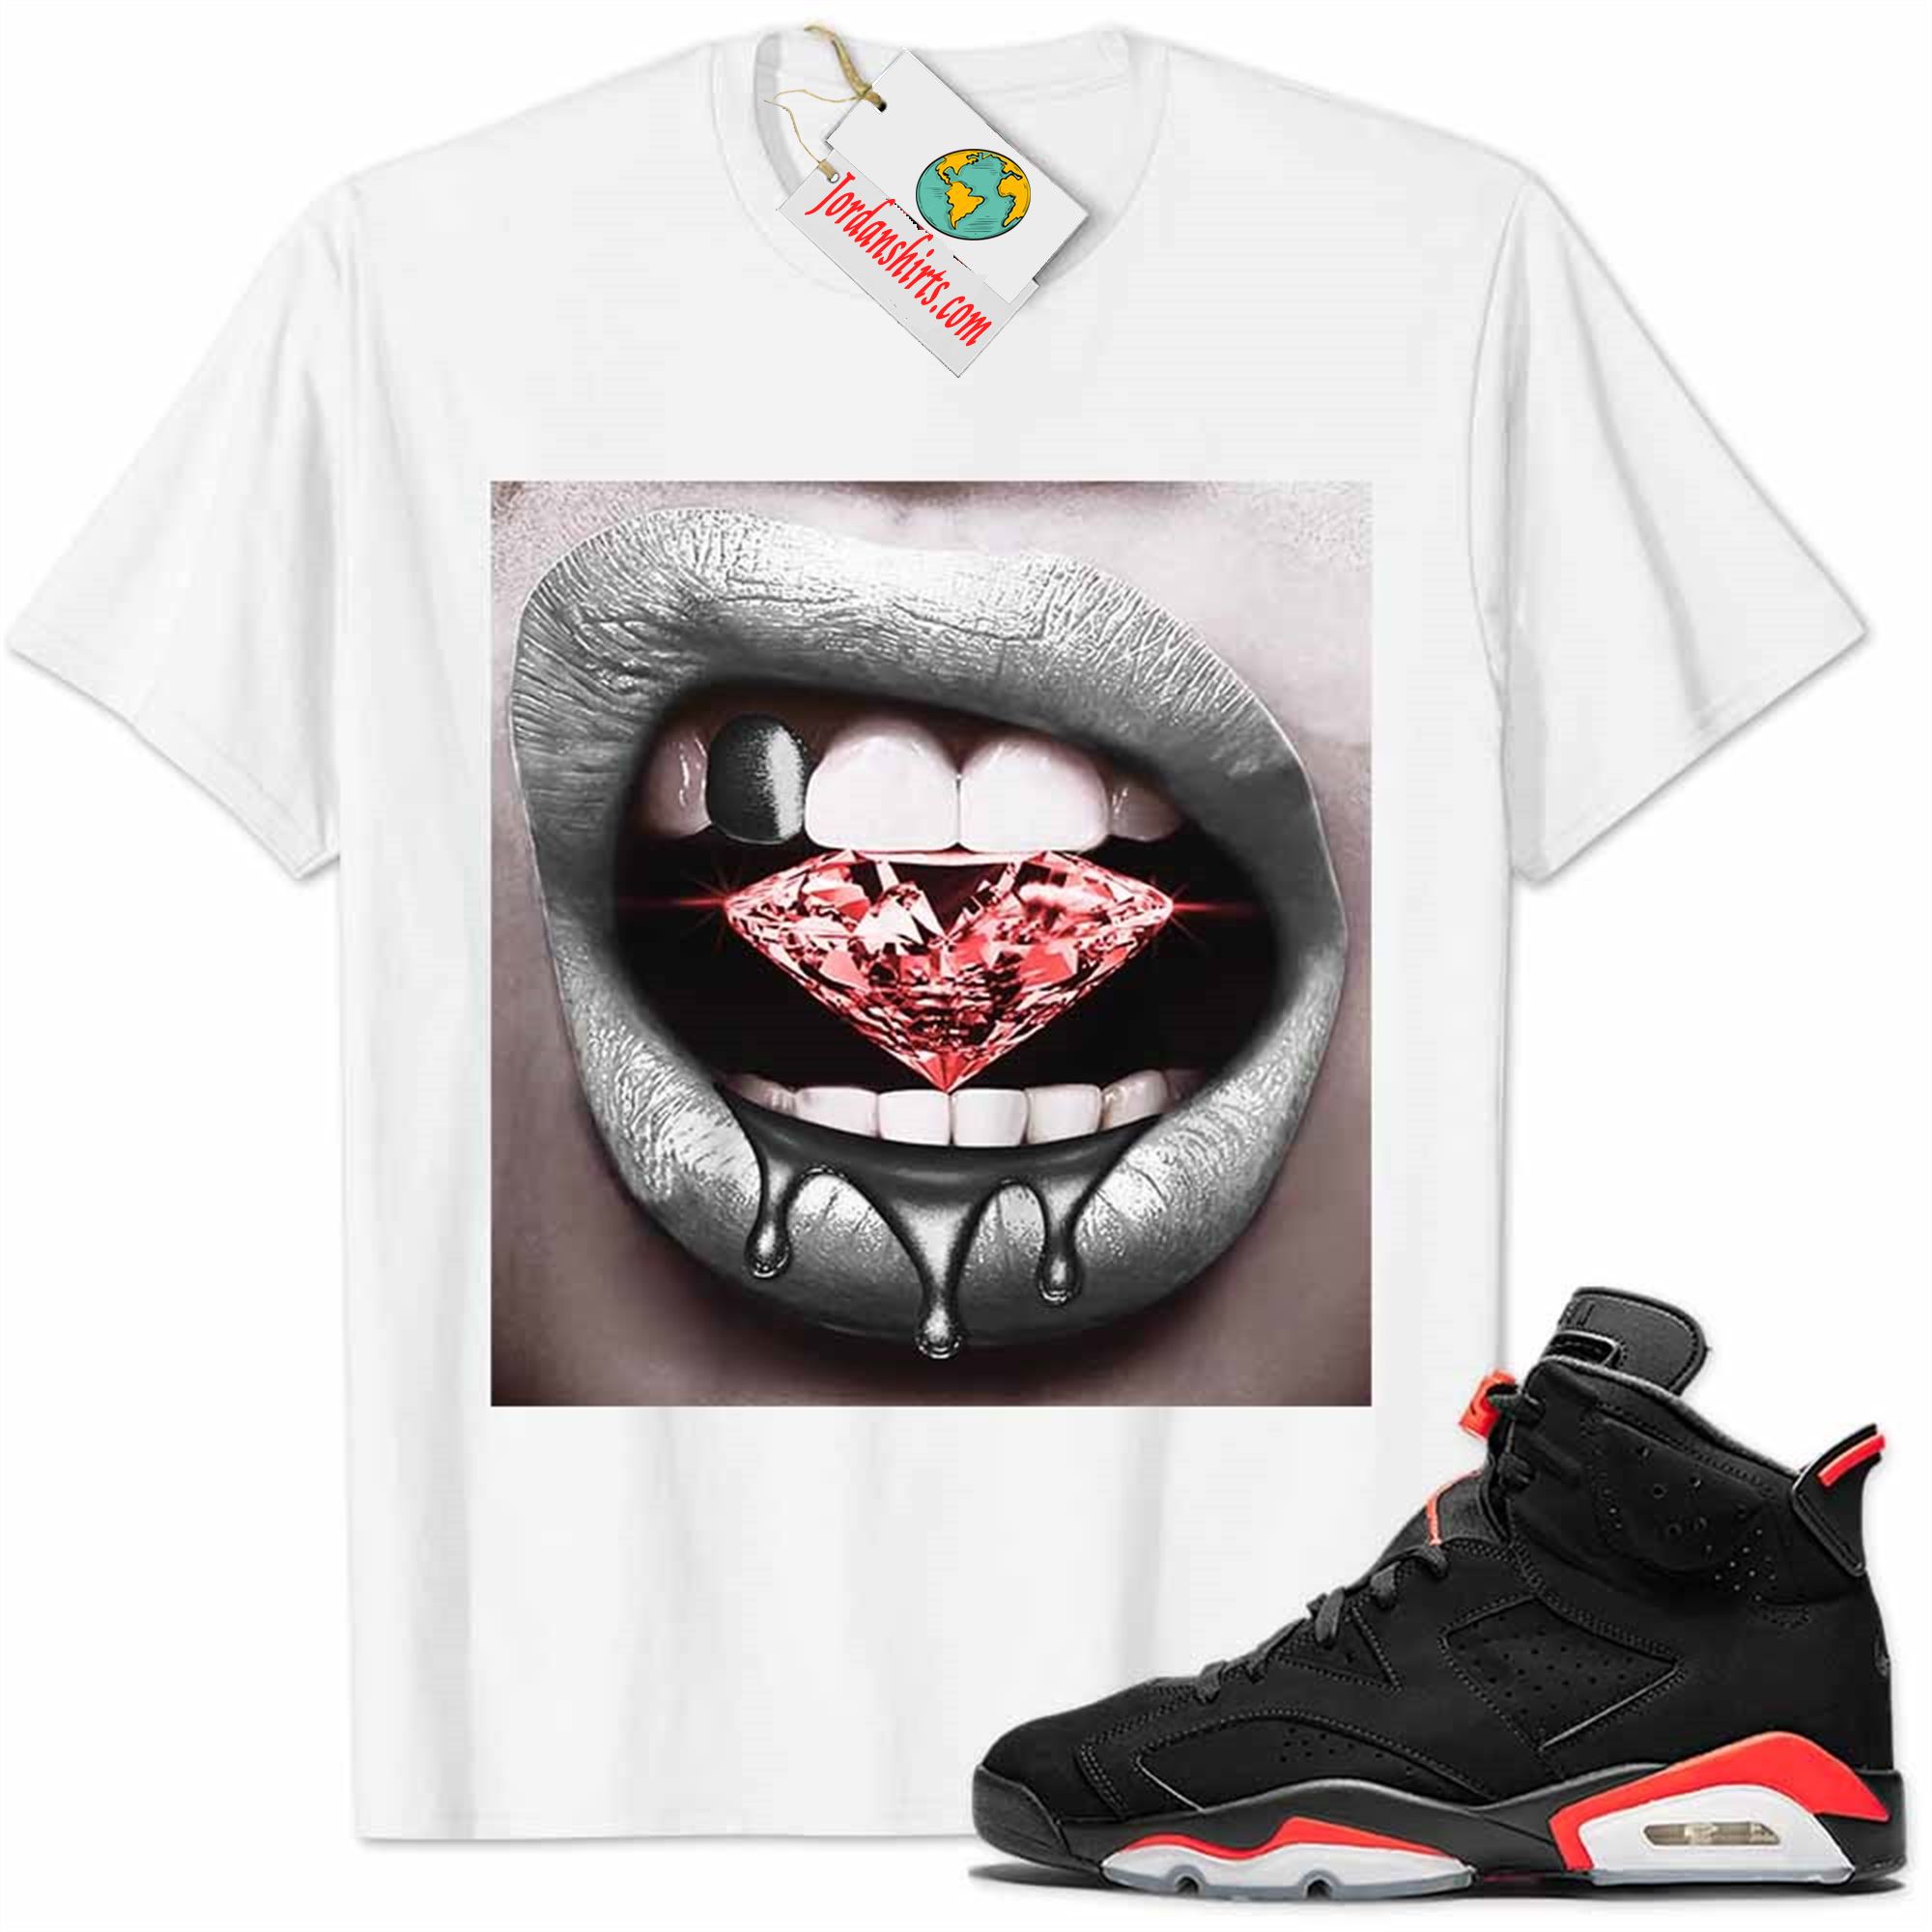 Jordan 6 Shirt, Jordan 6 Infrared Shirt Sexy Lip Bite Diamond Dripping White Full Size Up To 5xl